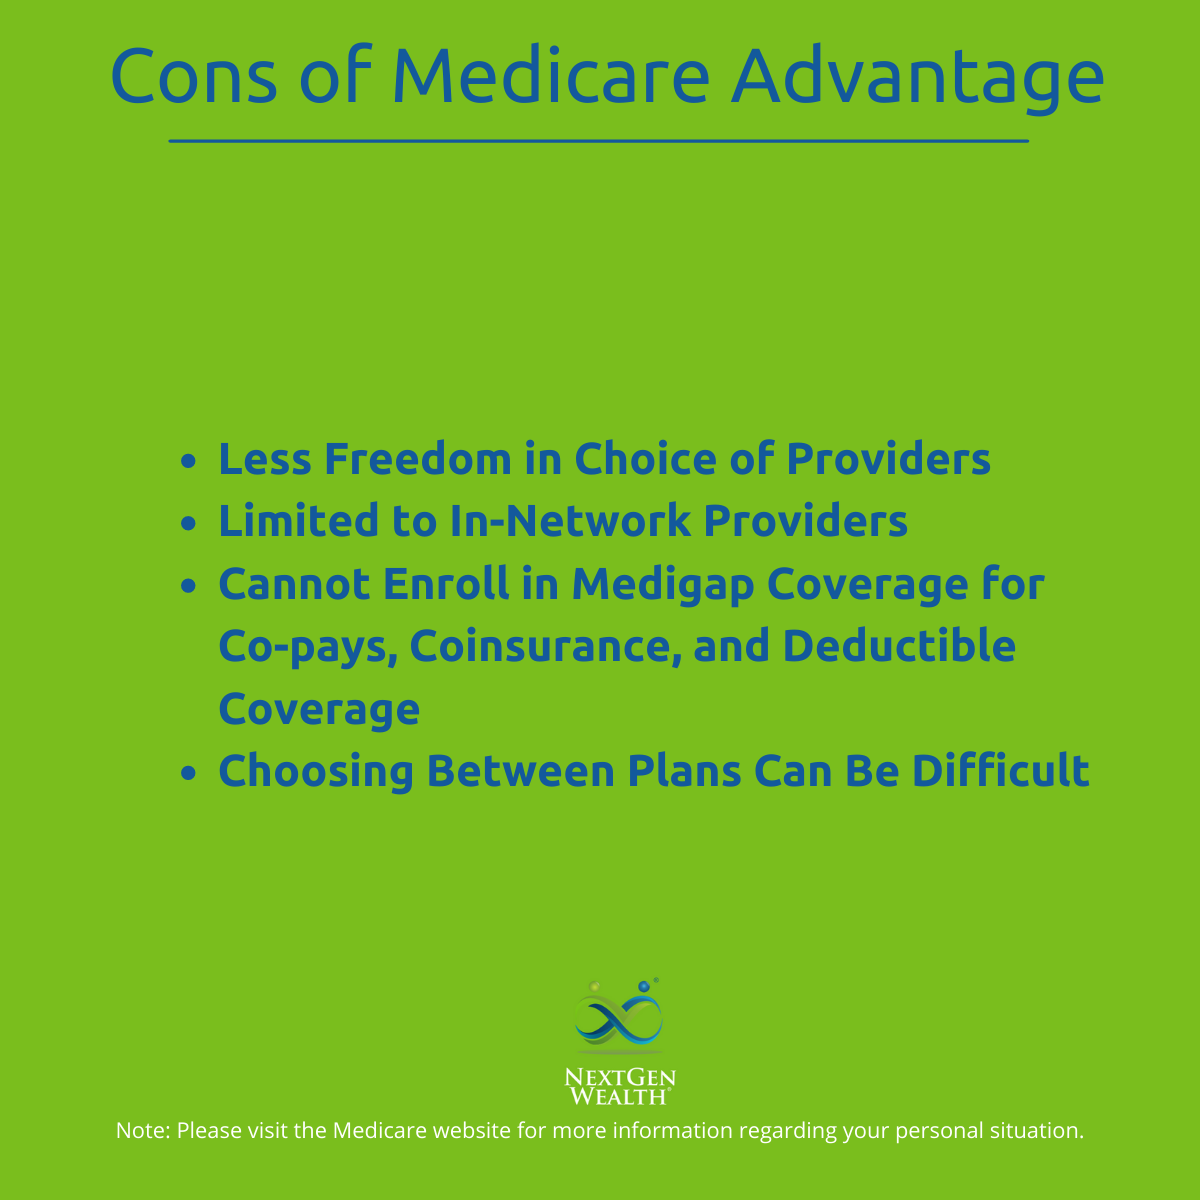 Cons of Medicare Advantage